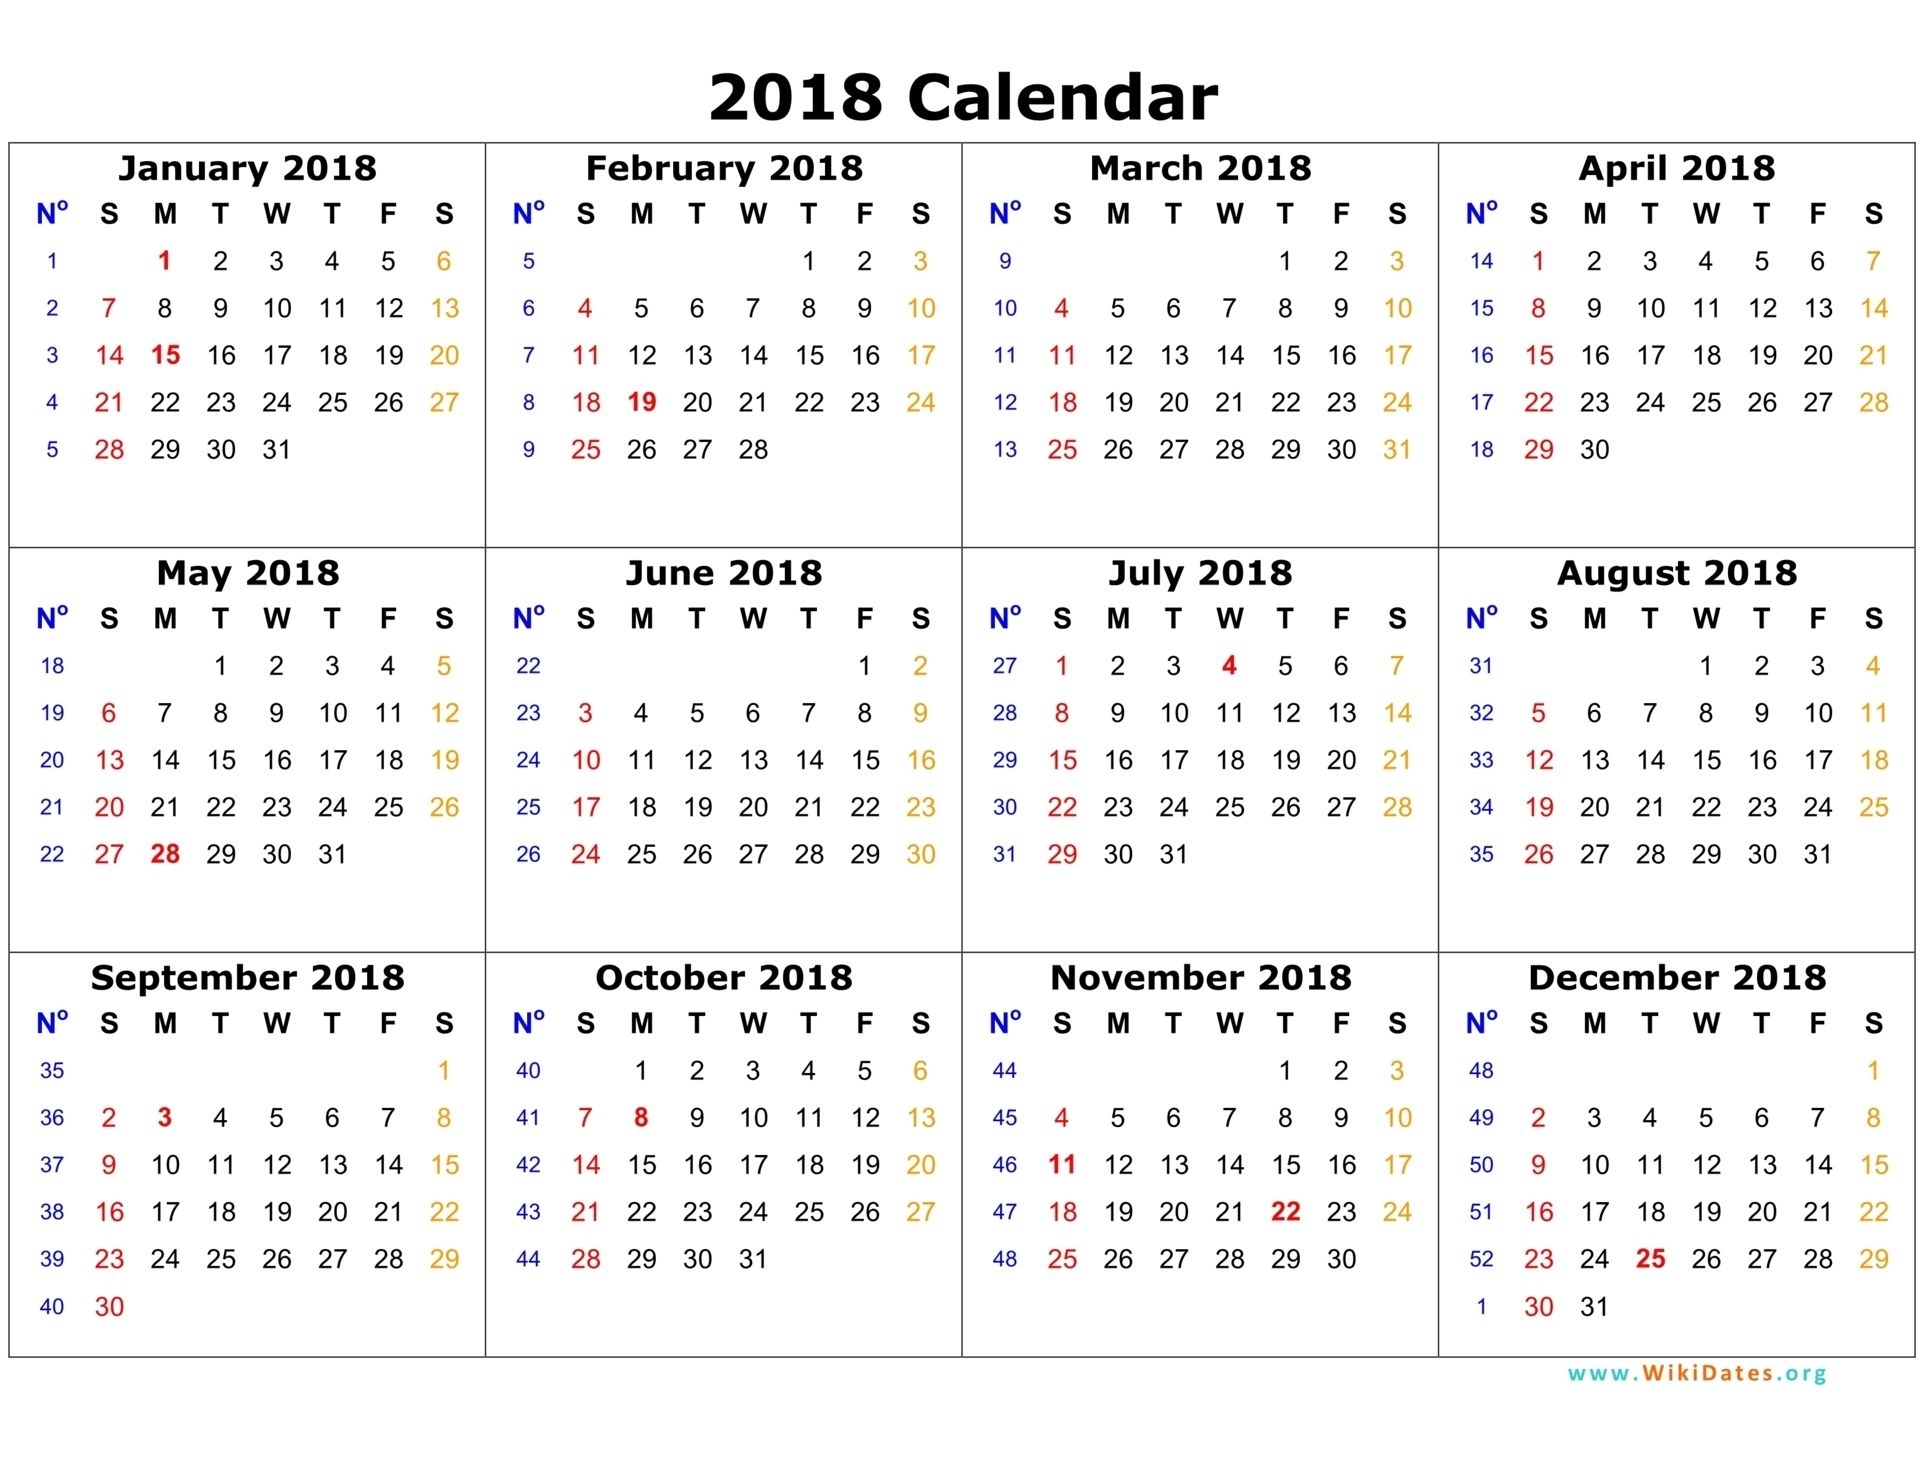 Annual Calendar 2018 Portrait Printable Calendar 2017 2018 2019 By Print 3 Calendar Months One Page